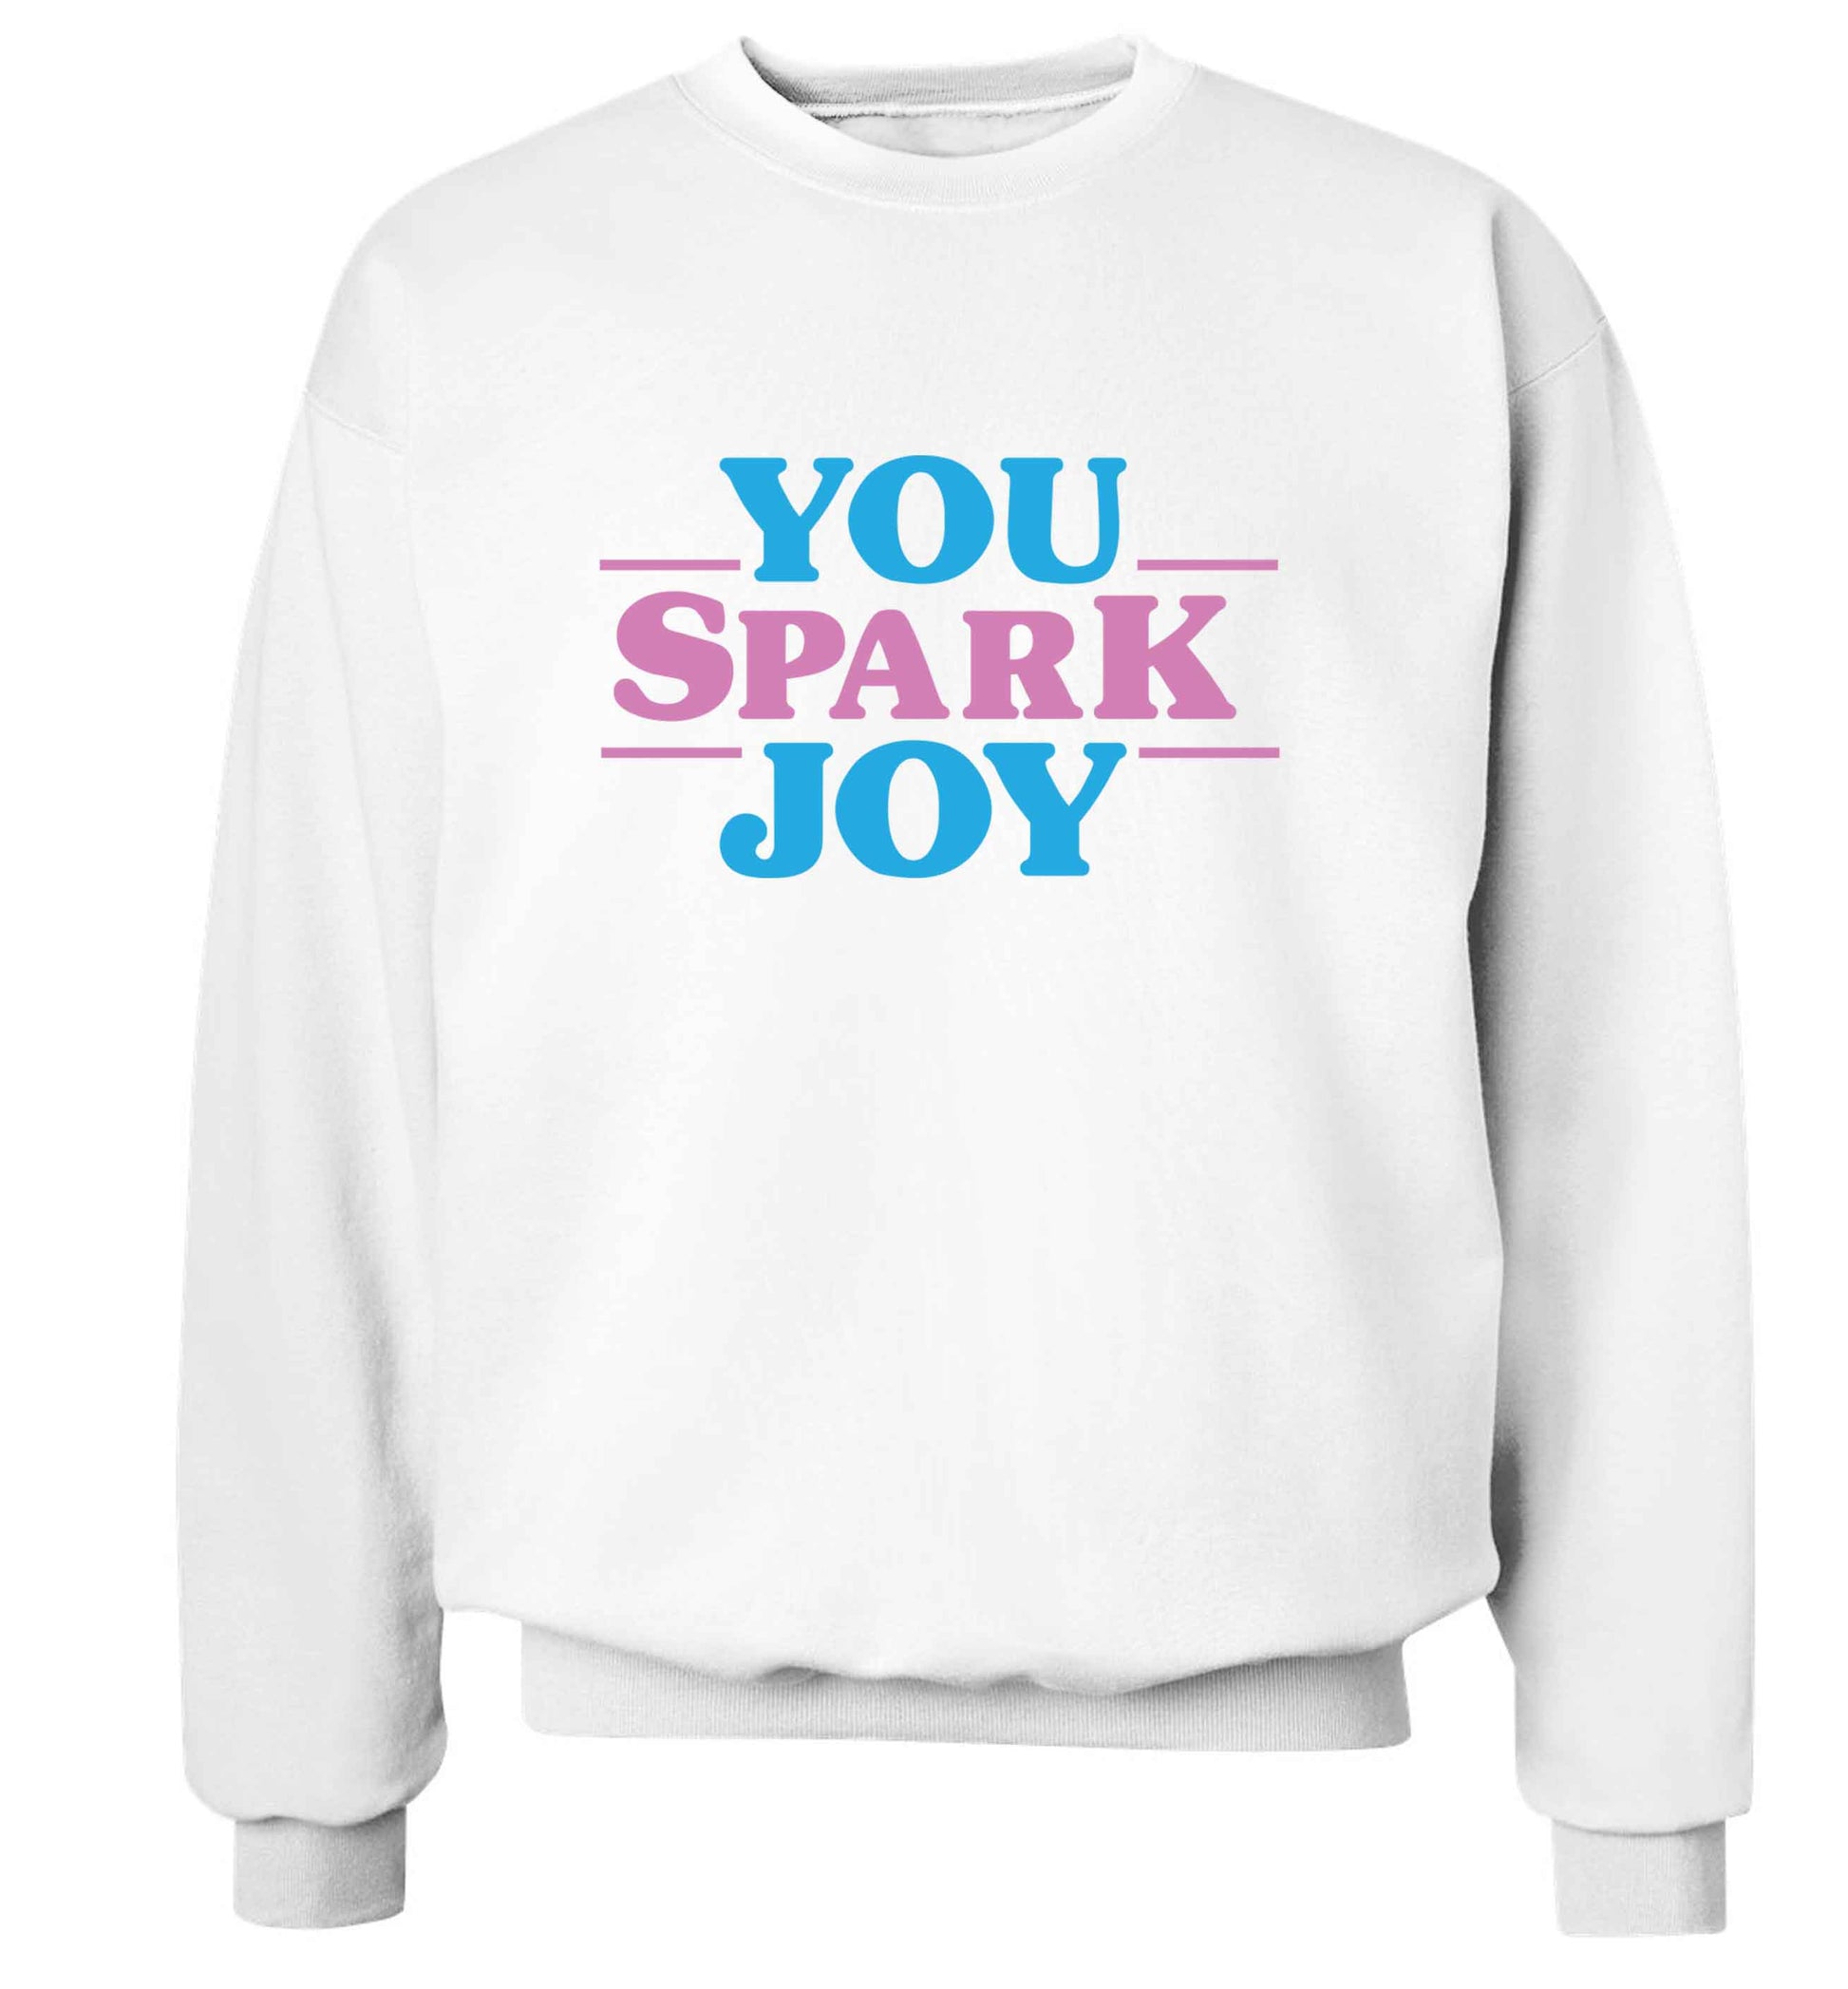 You spark joy adult's unisex white sweater 2XL